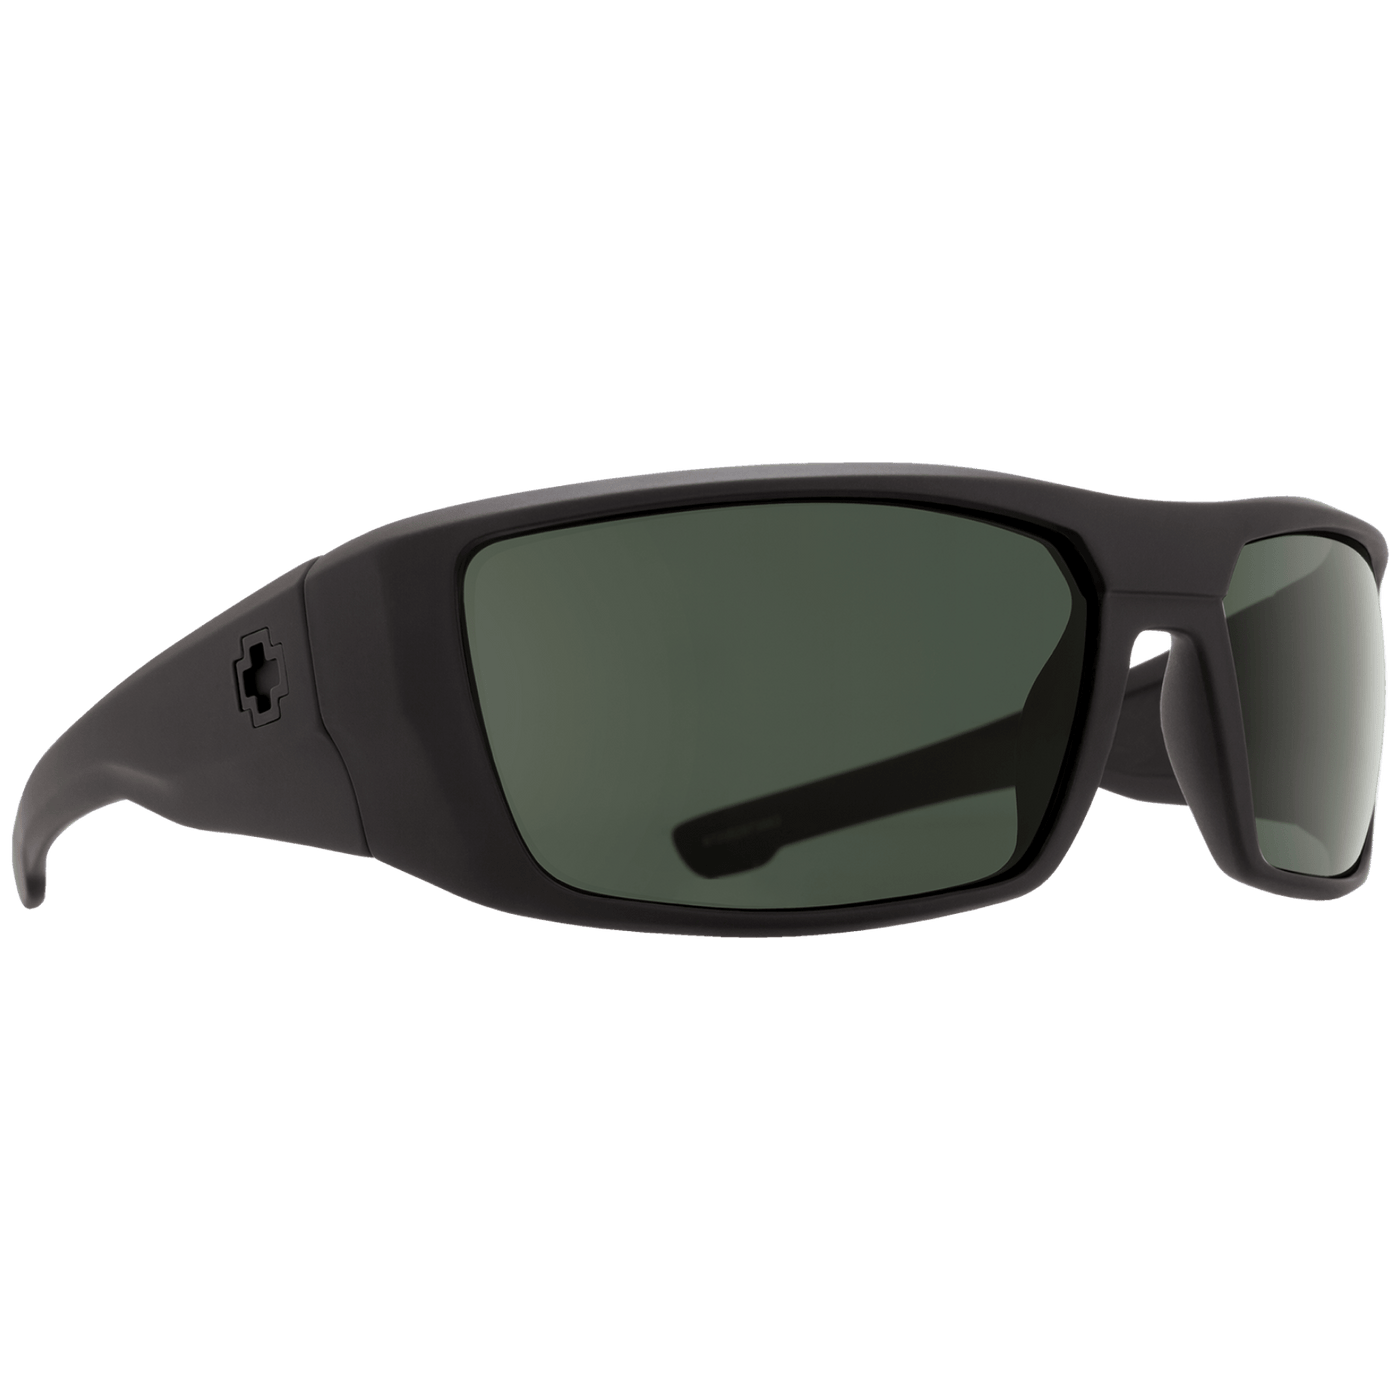 SPY DIRK Polarized Sunglasses, Happy Lens - Soft Matte Black